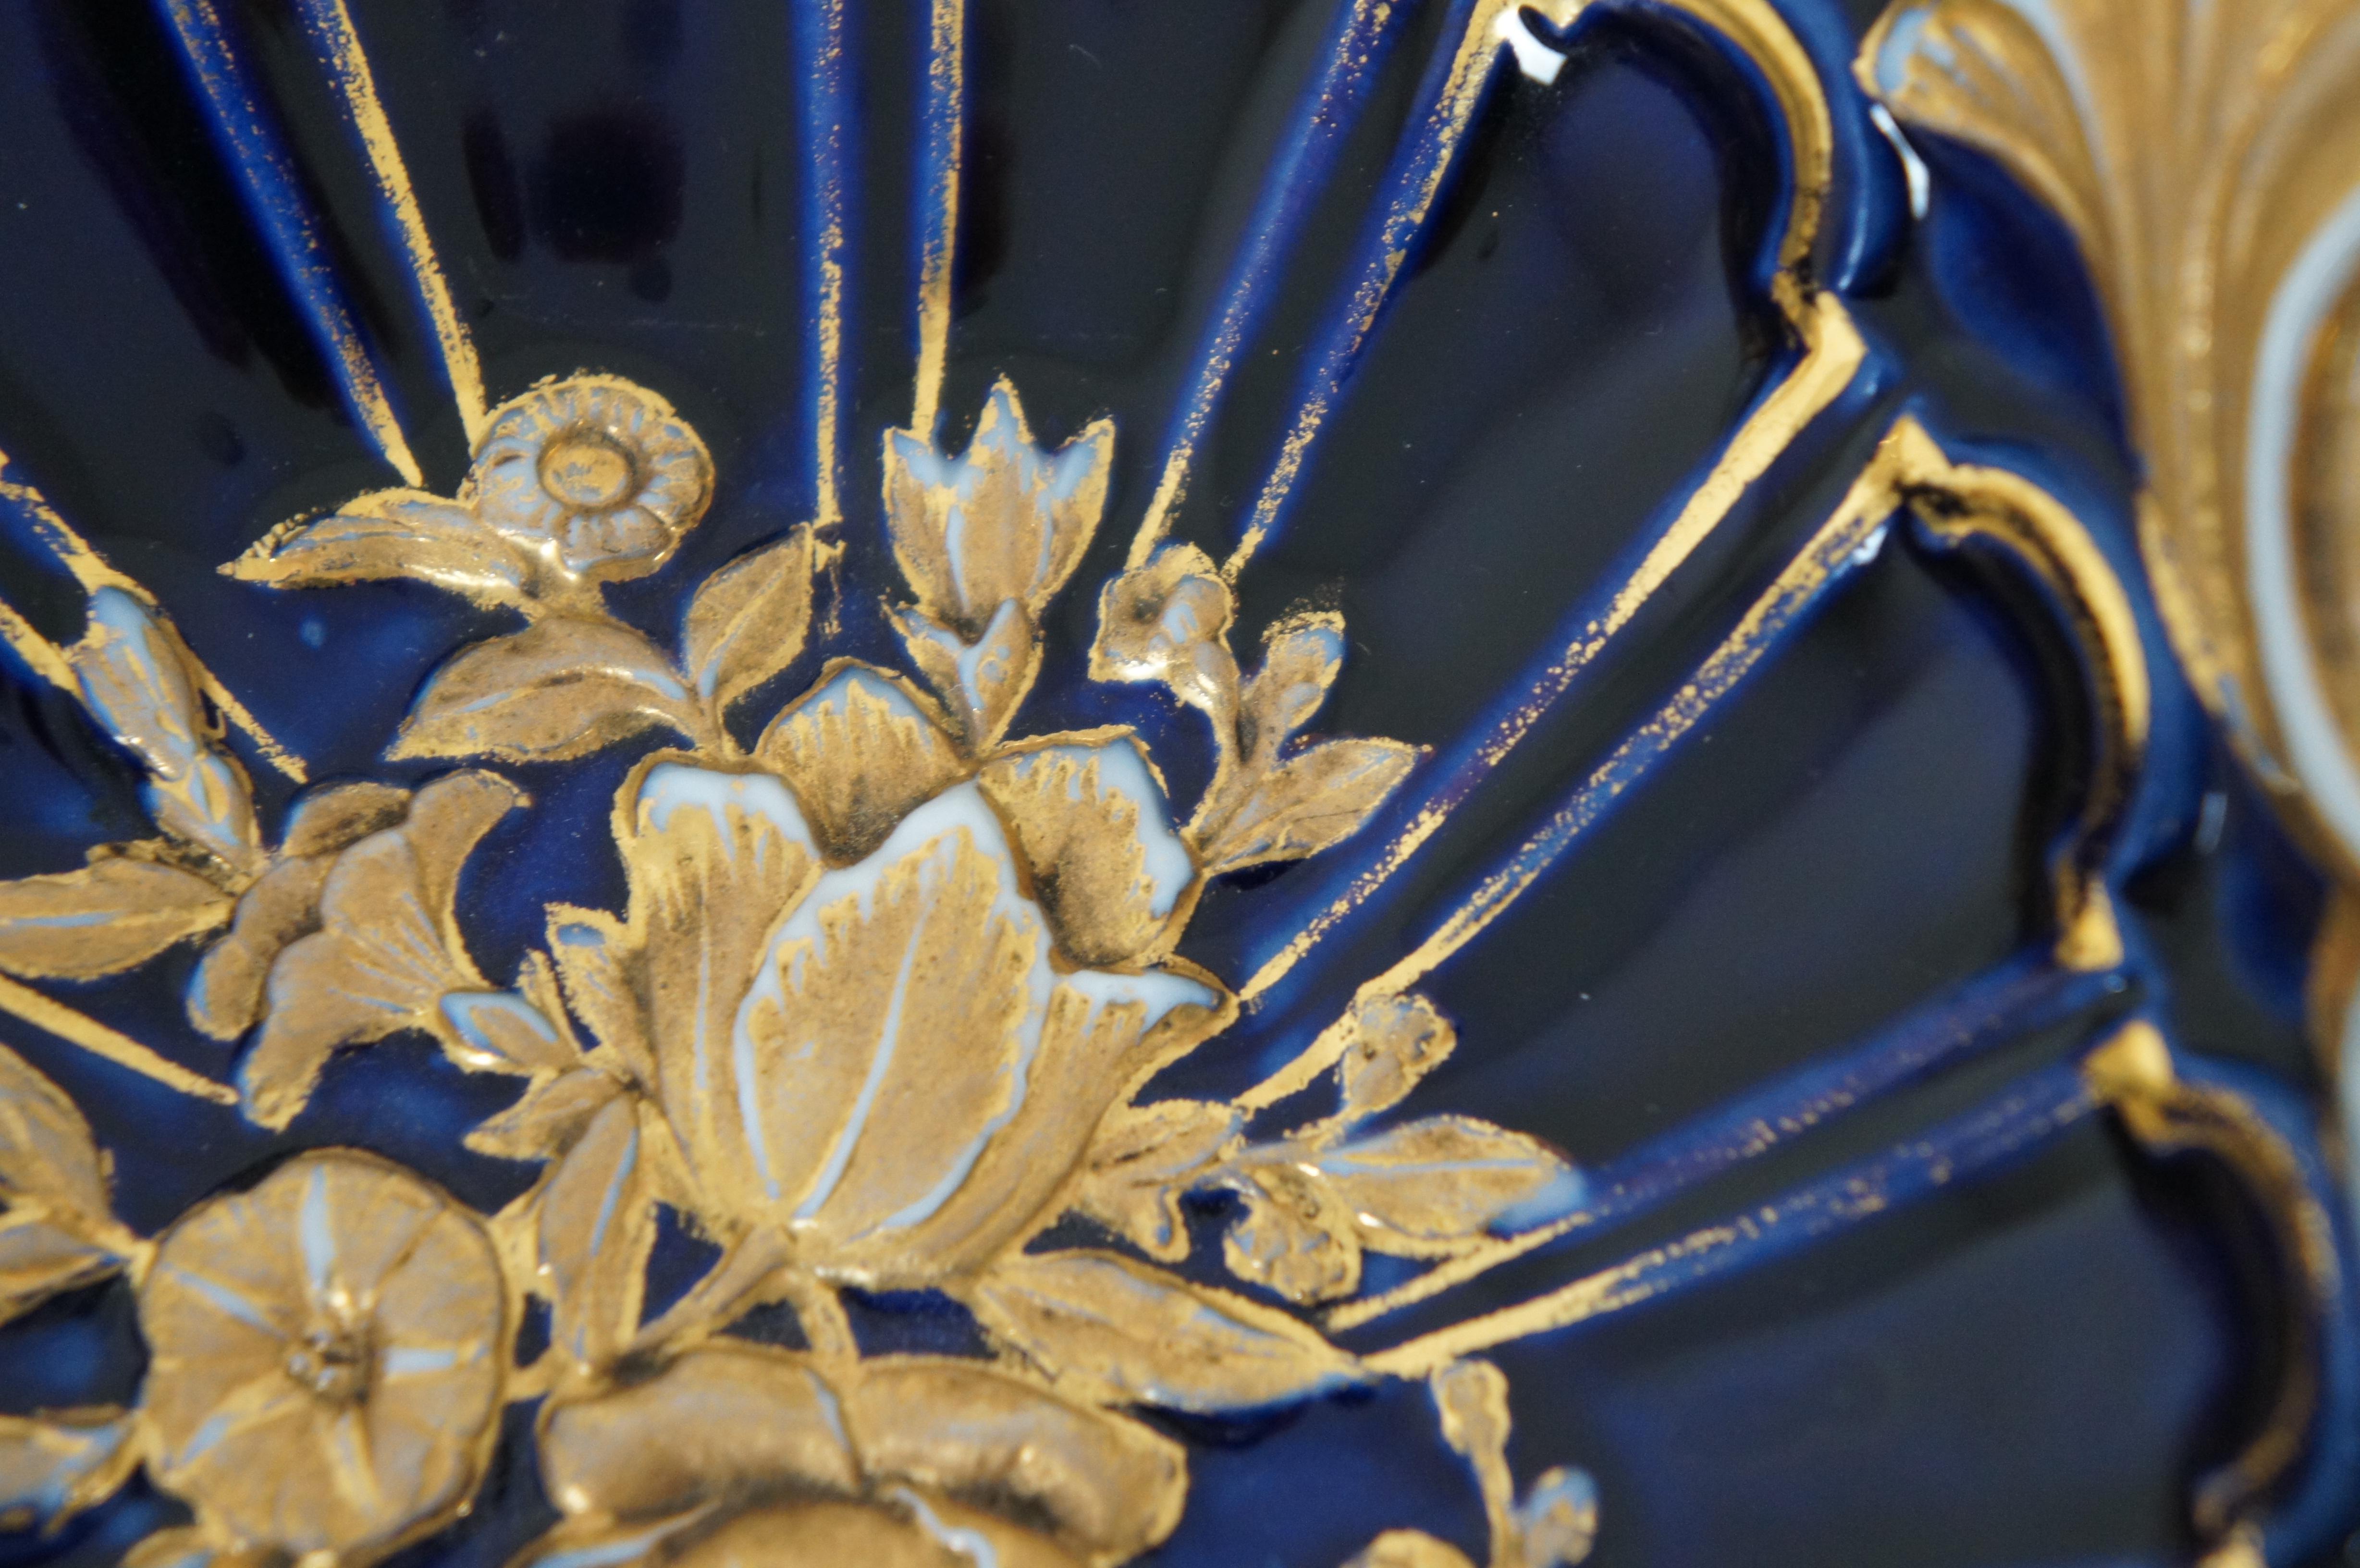 Antiker Dresdener Meissener Tafelaufsatz mit kobaltvergoldeten Rosen, netzförmig, 14